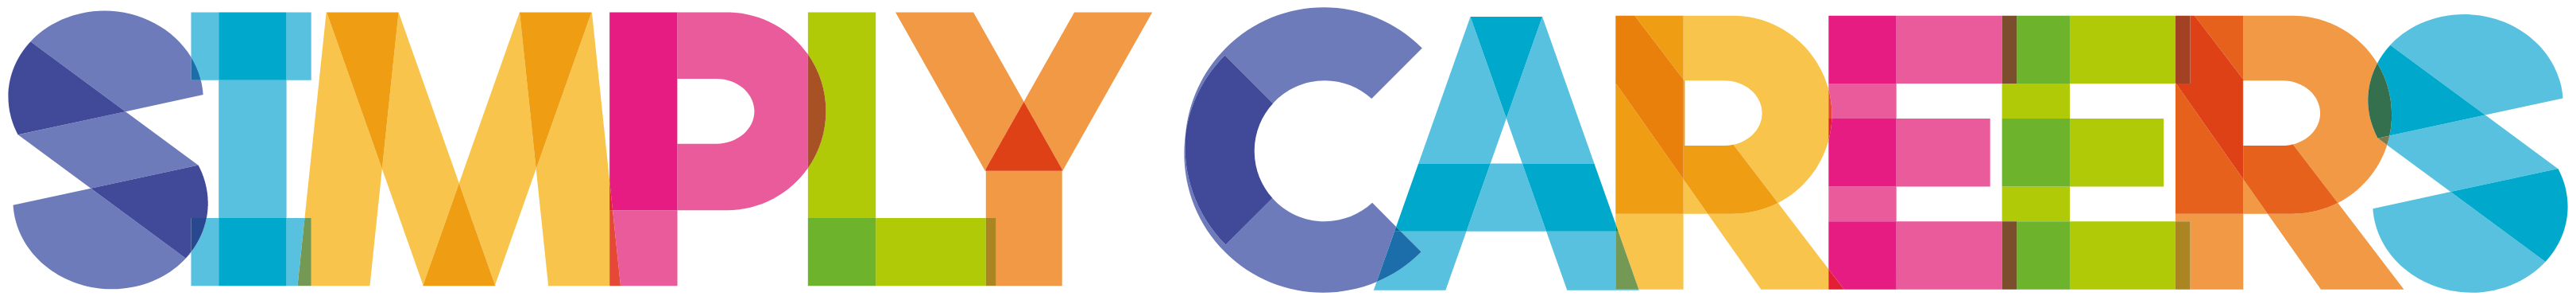 Simply Careers Logo